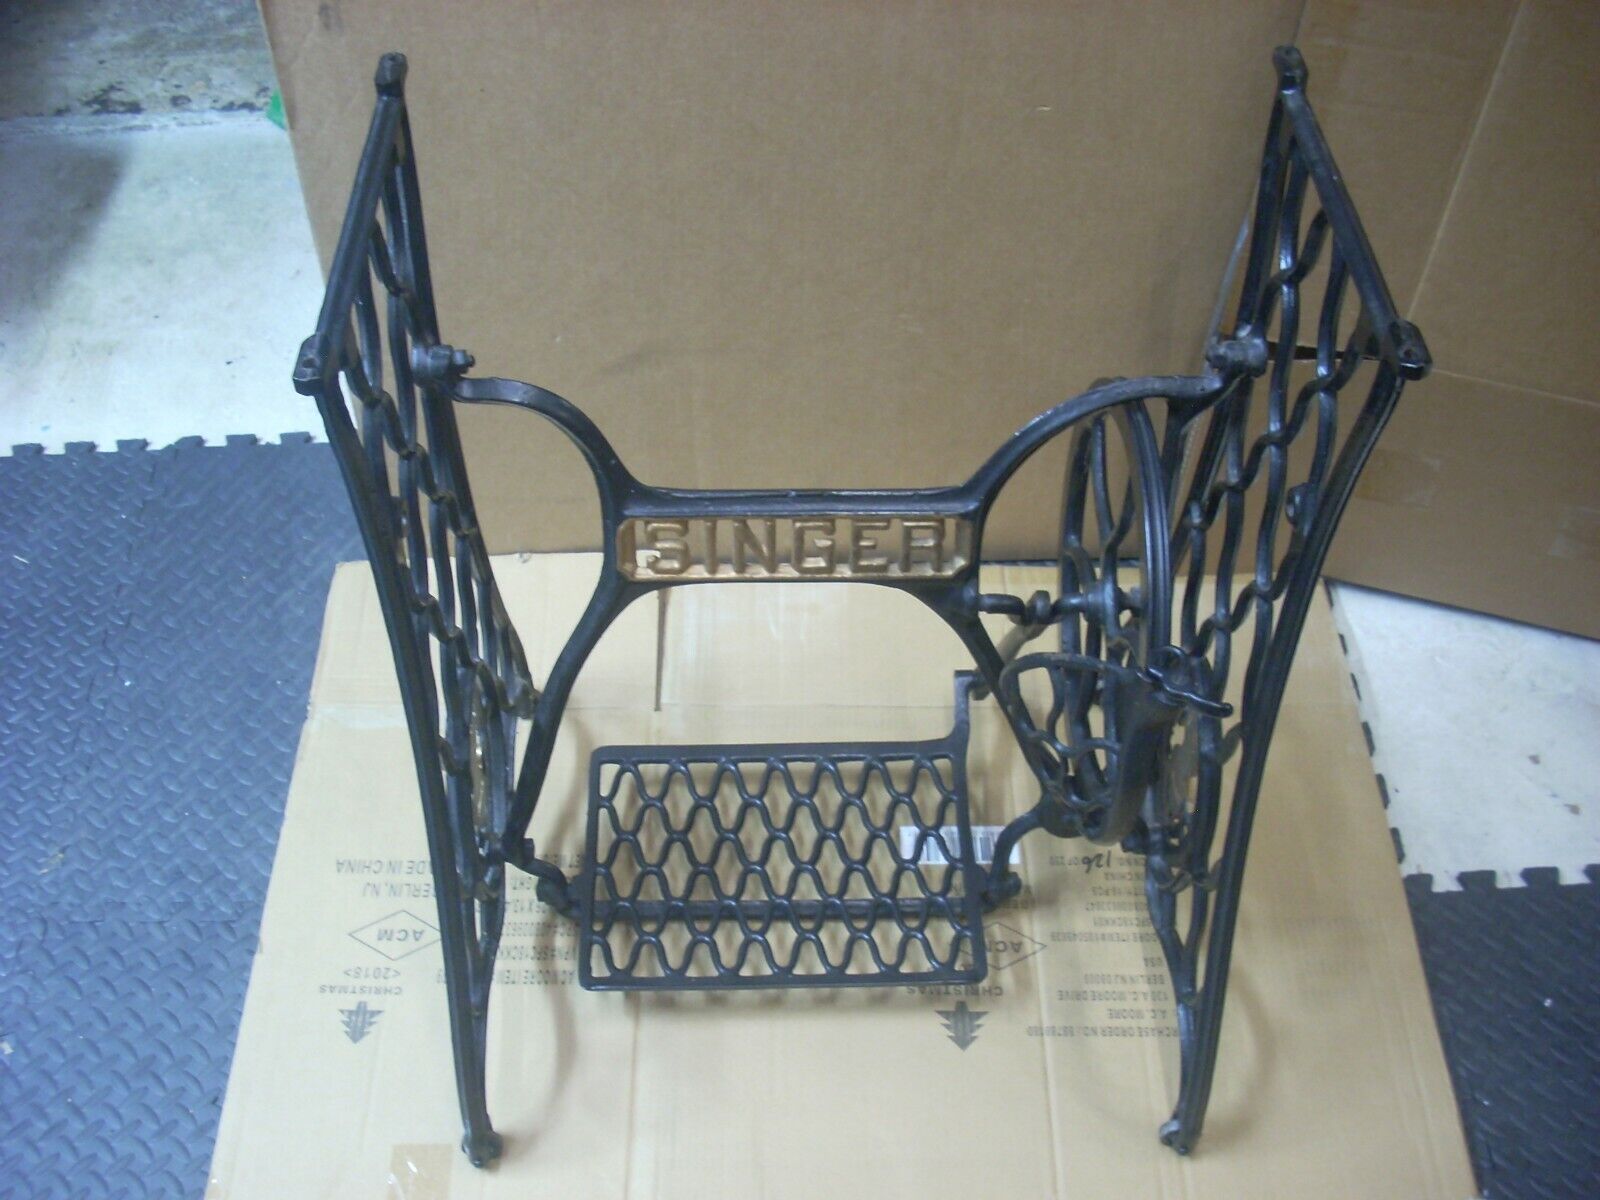  Antique Singer Treadle Sewing Machine Cast Iron Base w/ Wood Pitman Arm